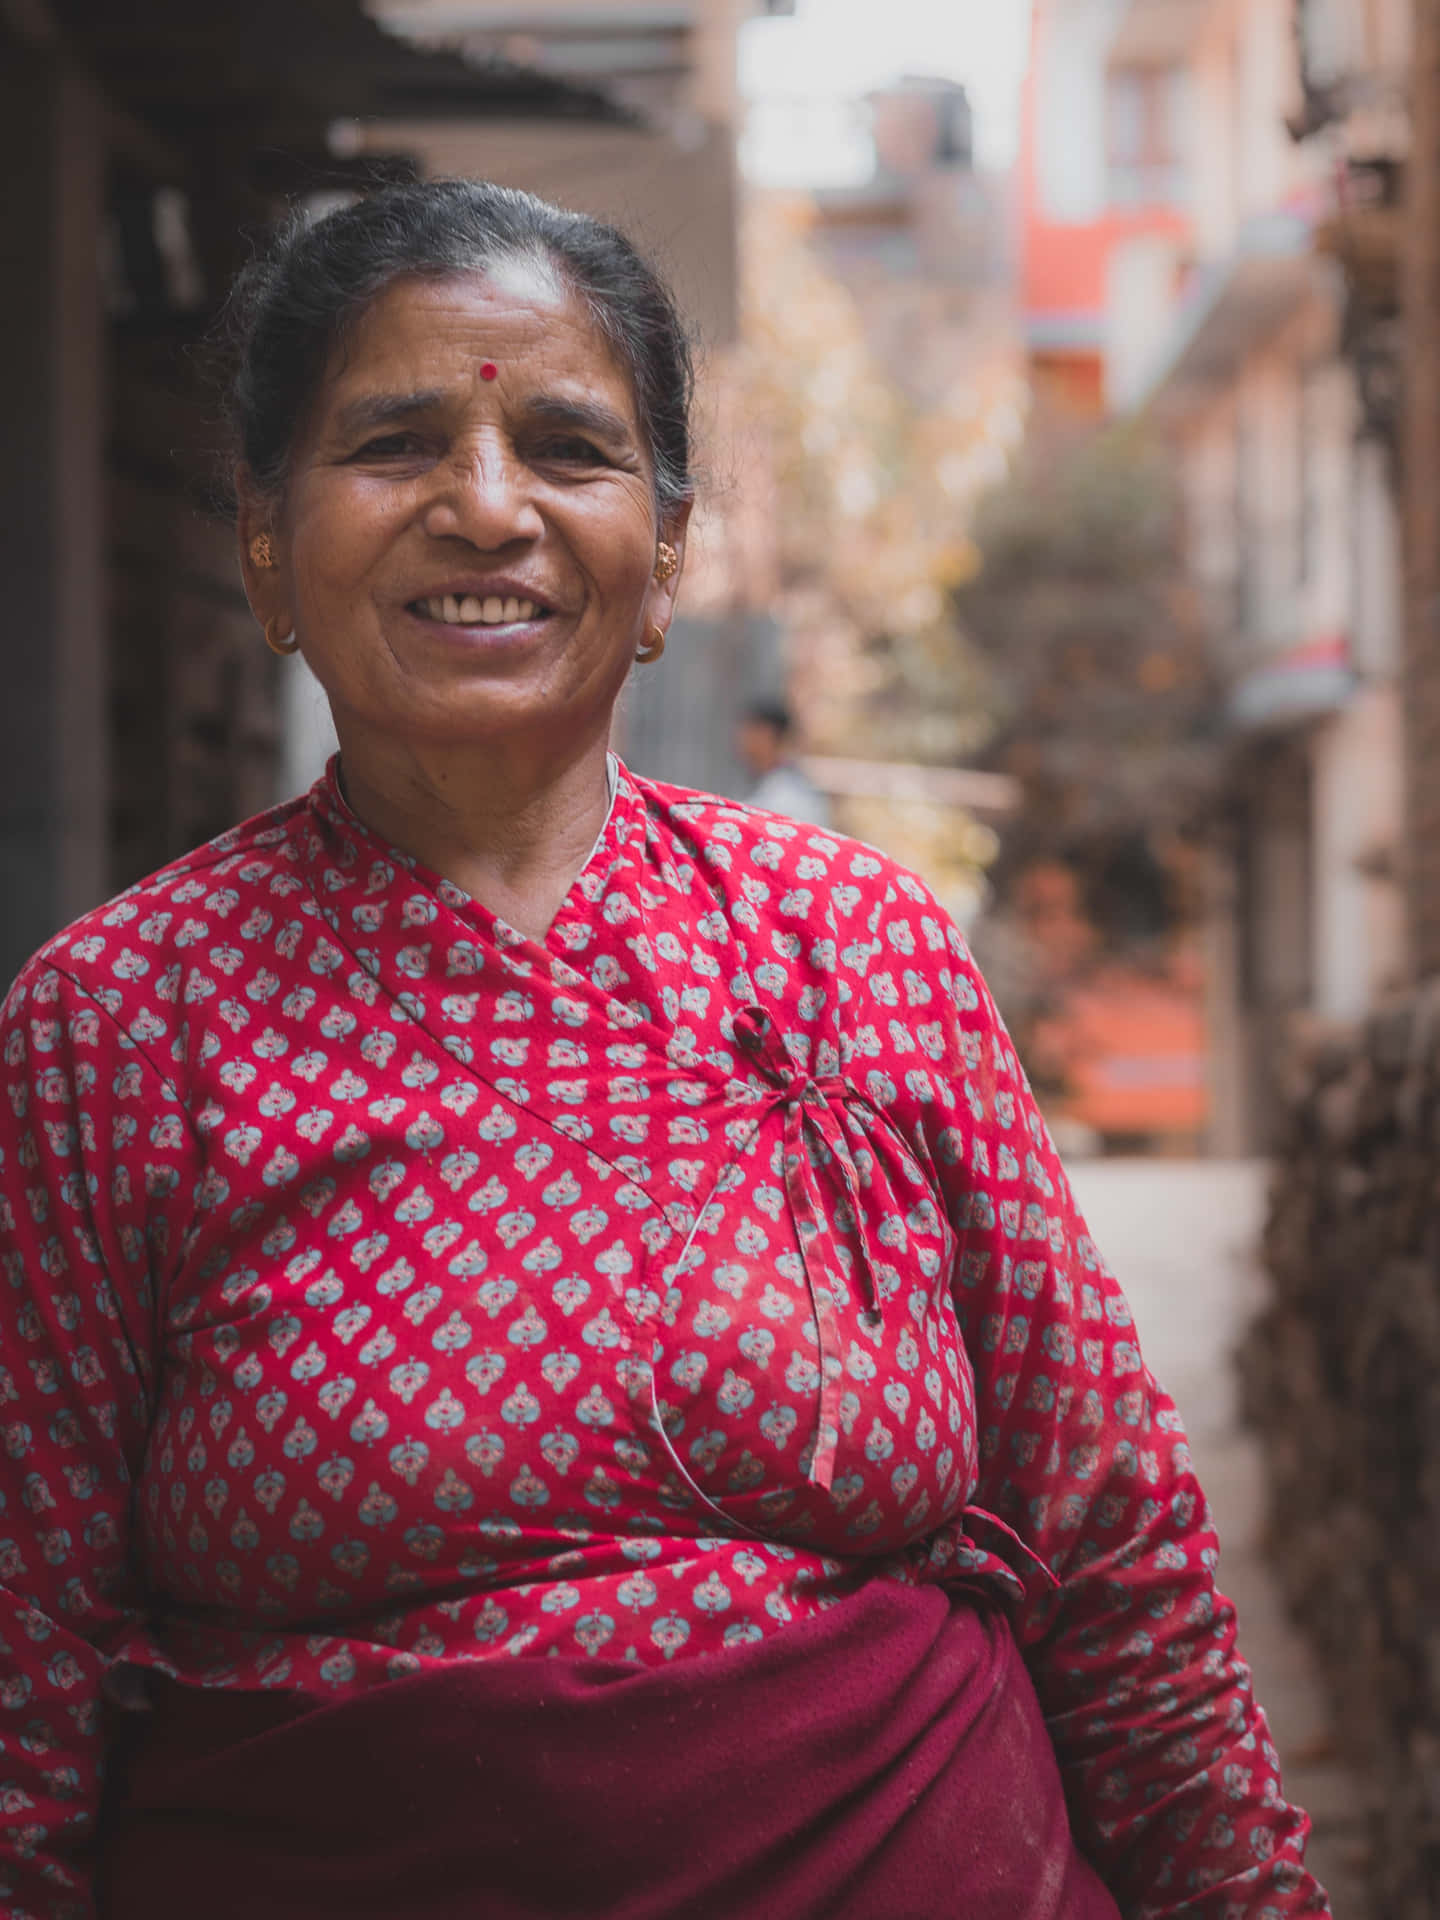 Mature Indian Woman With Bindi Background